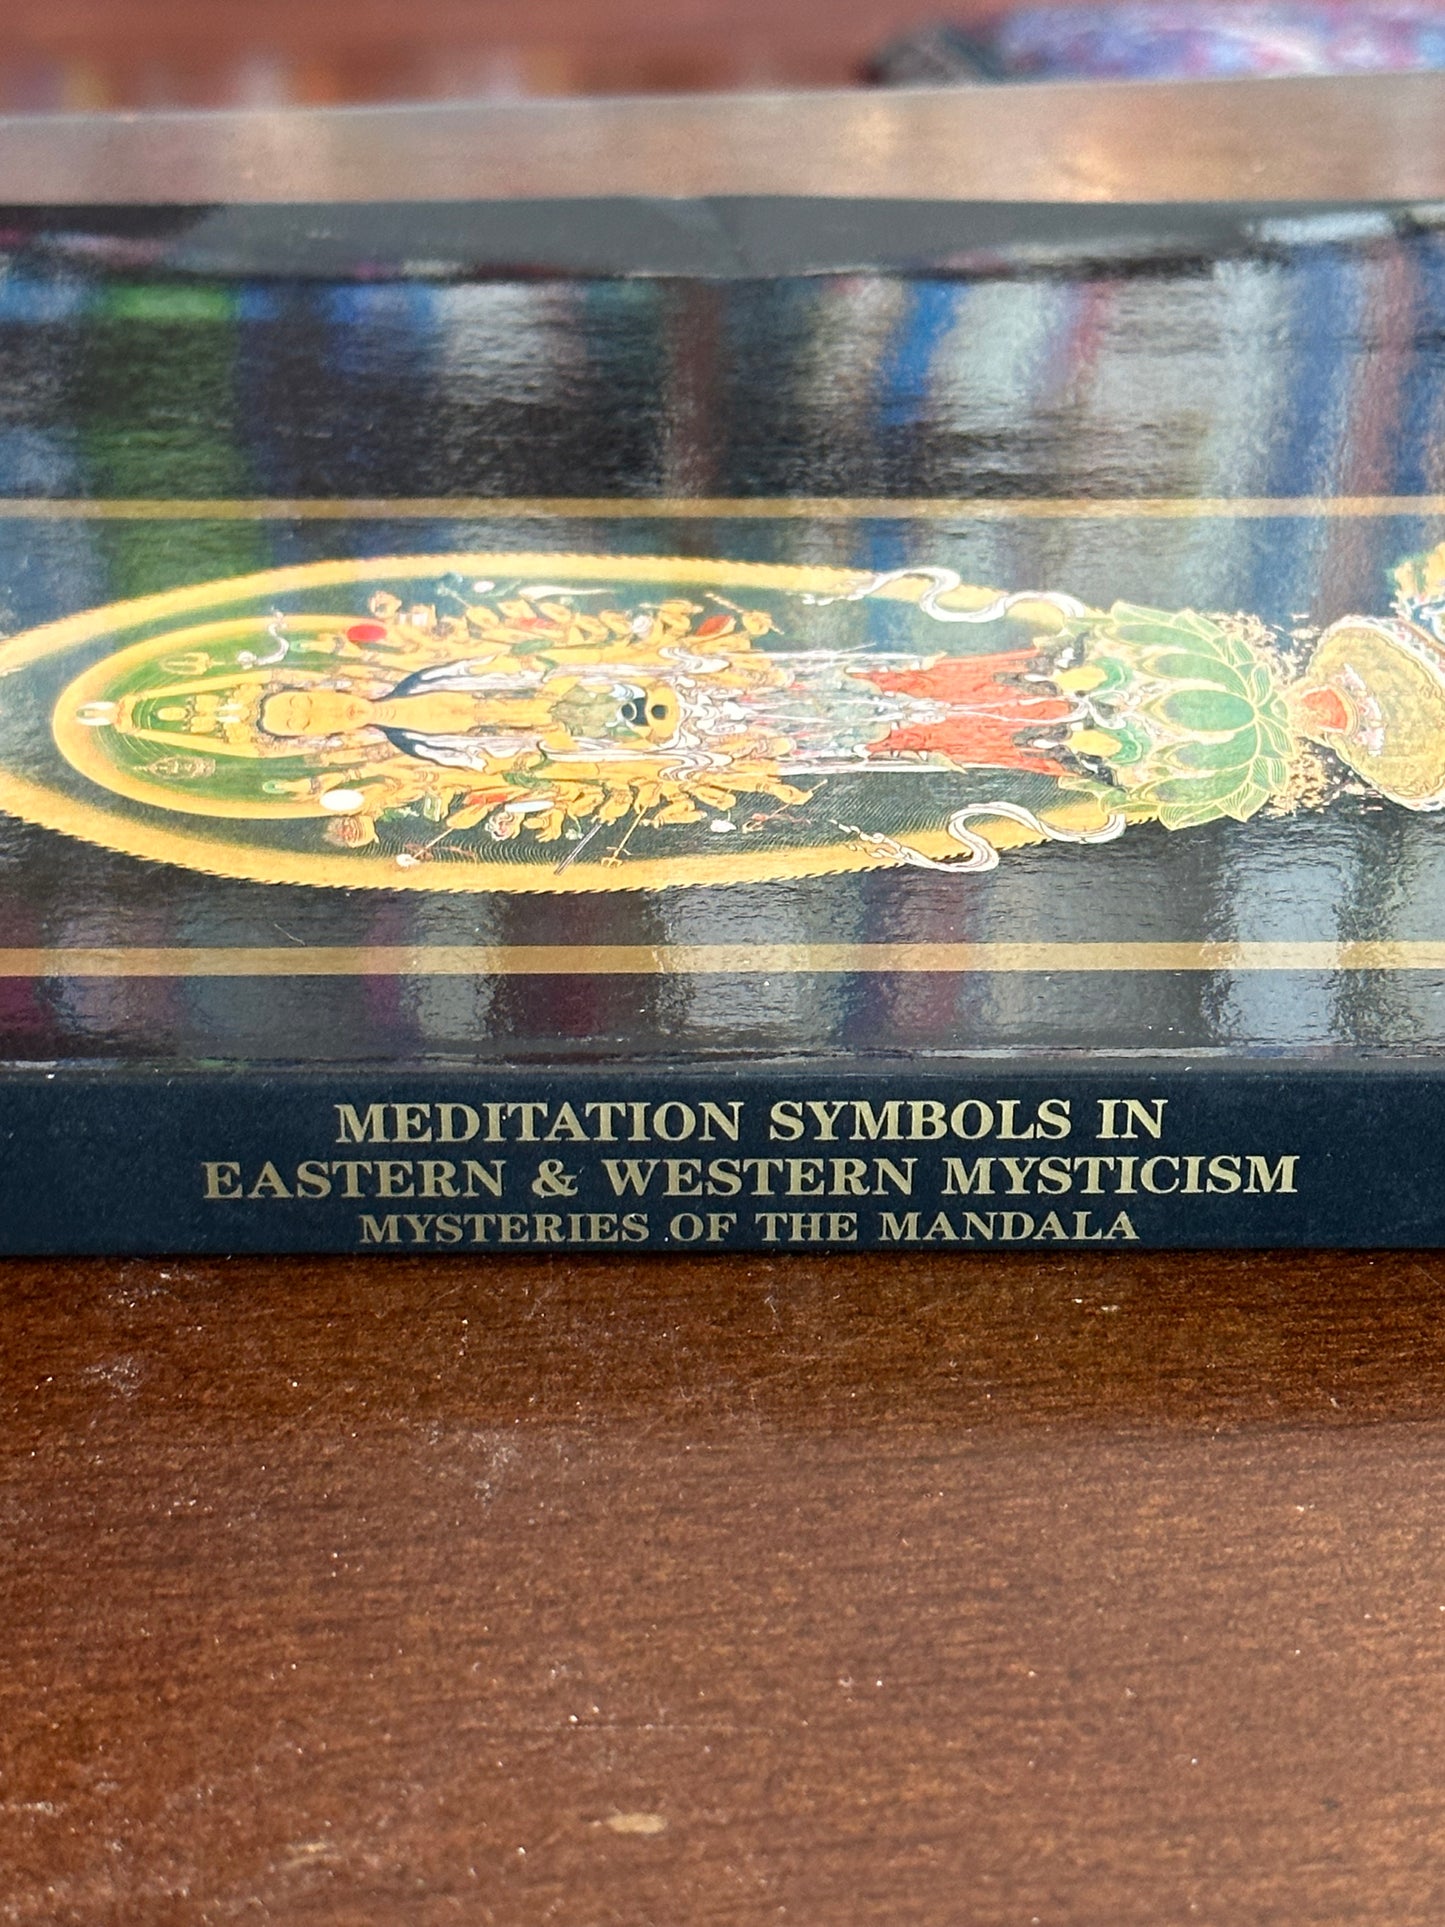 Meditation Symbols in Eastern & Western Mysticism by Manly P. Hall